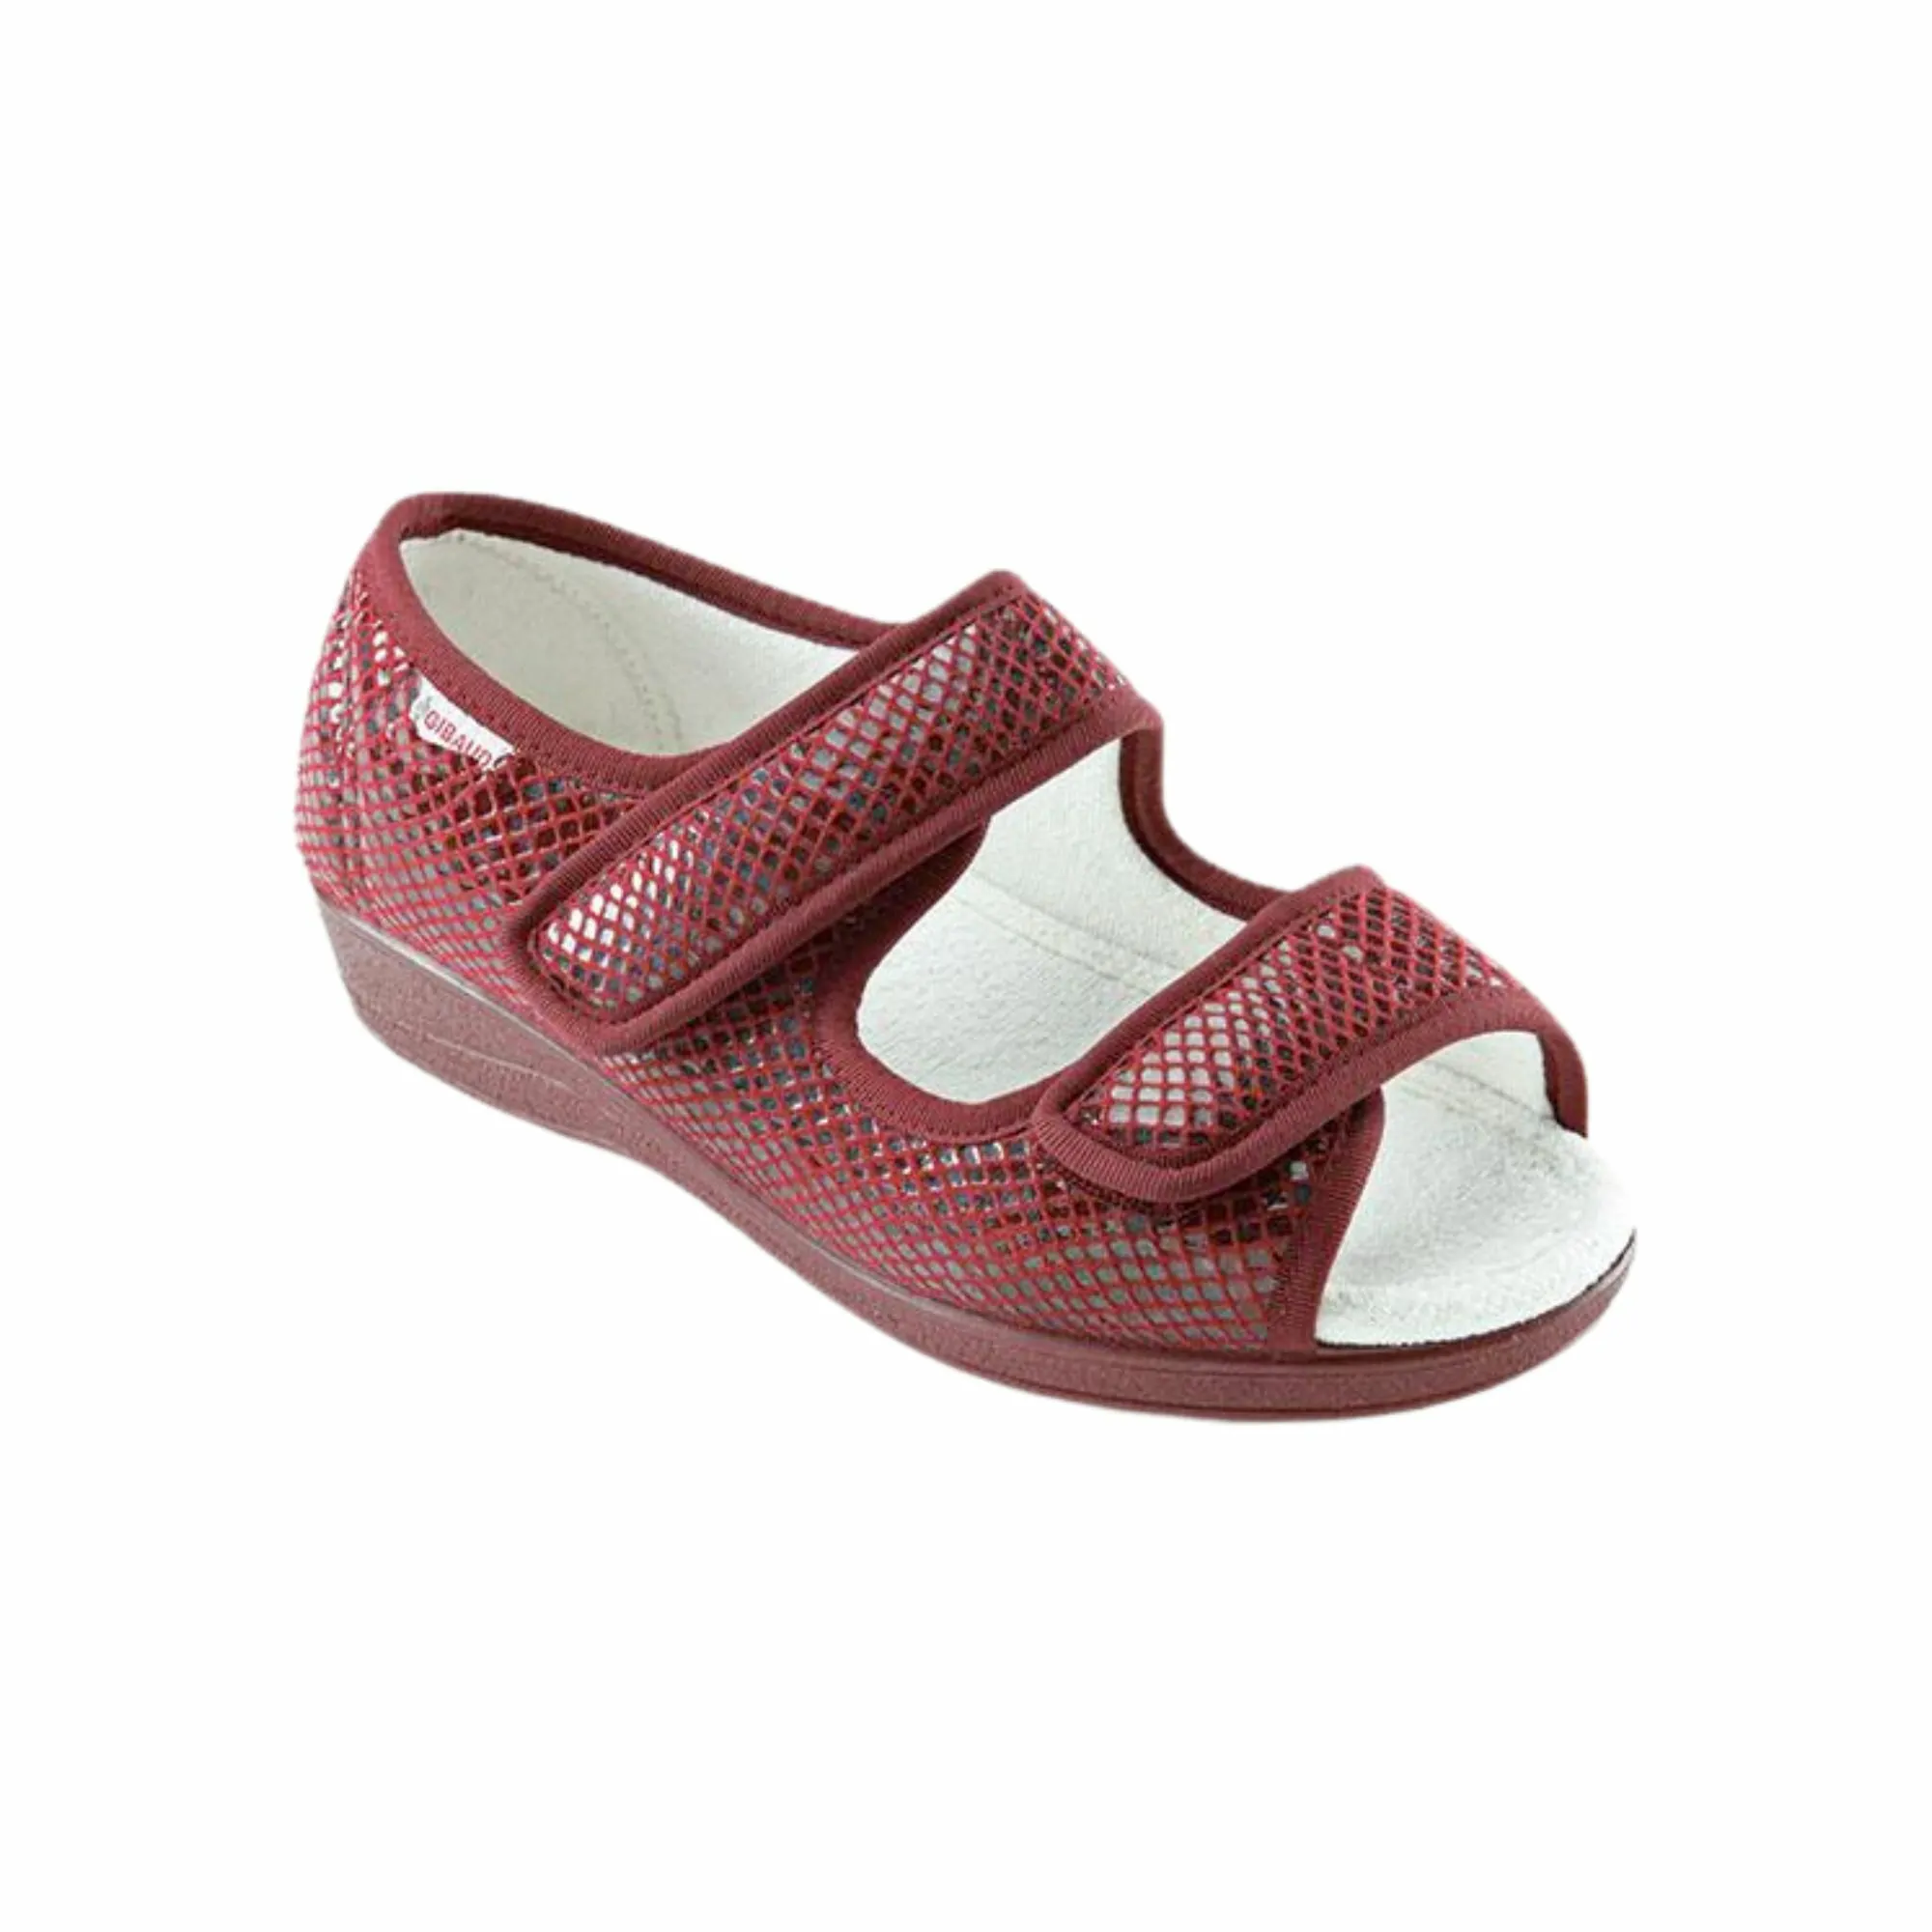 Chaussures femme Kea - Textile - Gamme CHUT - Gibaud